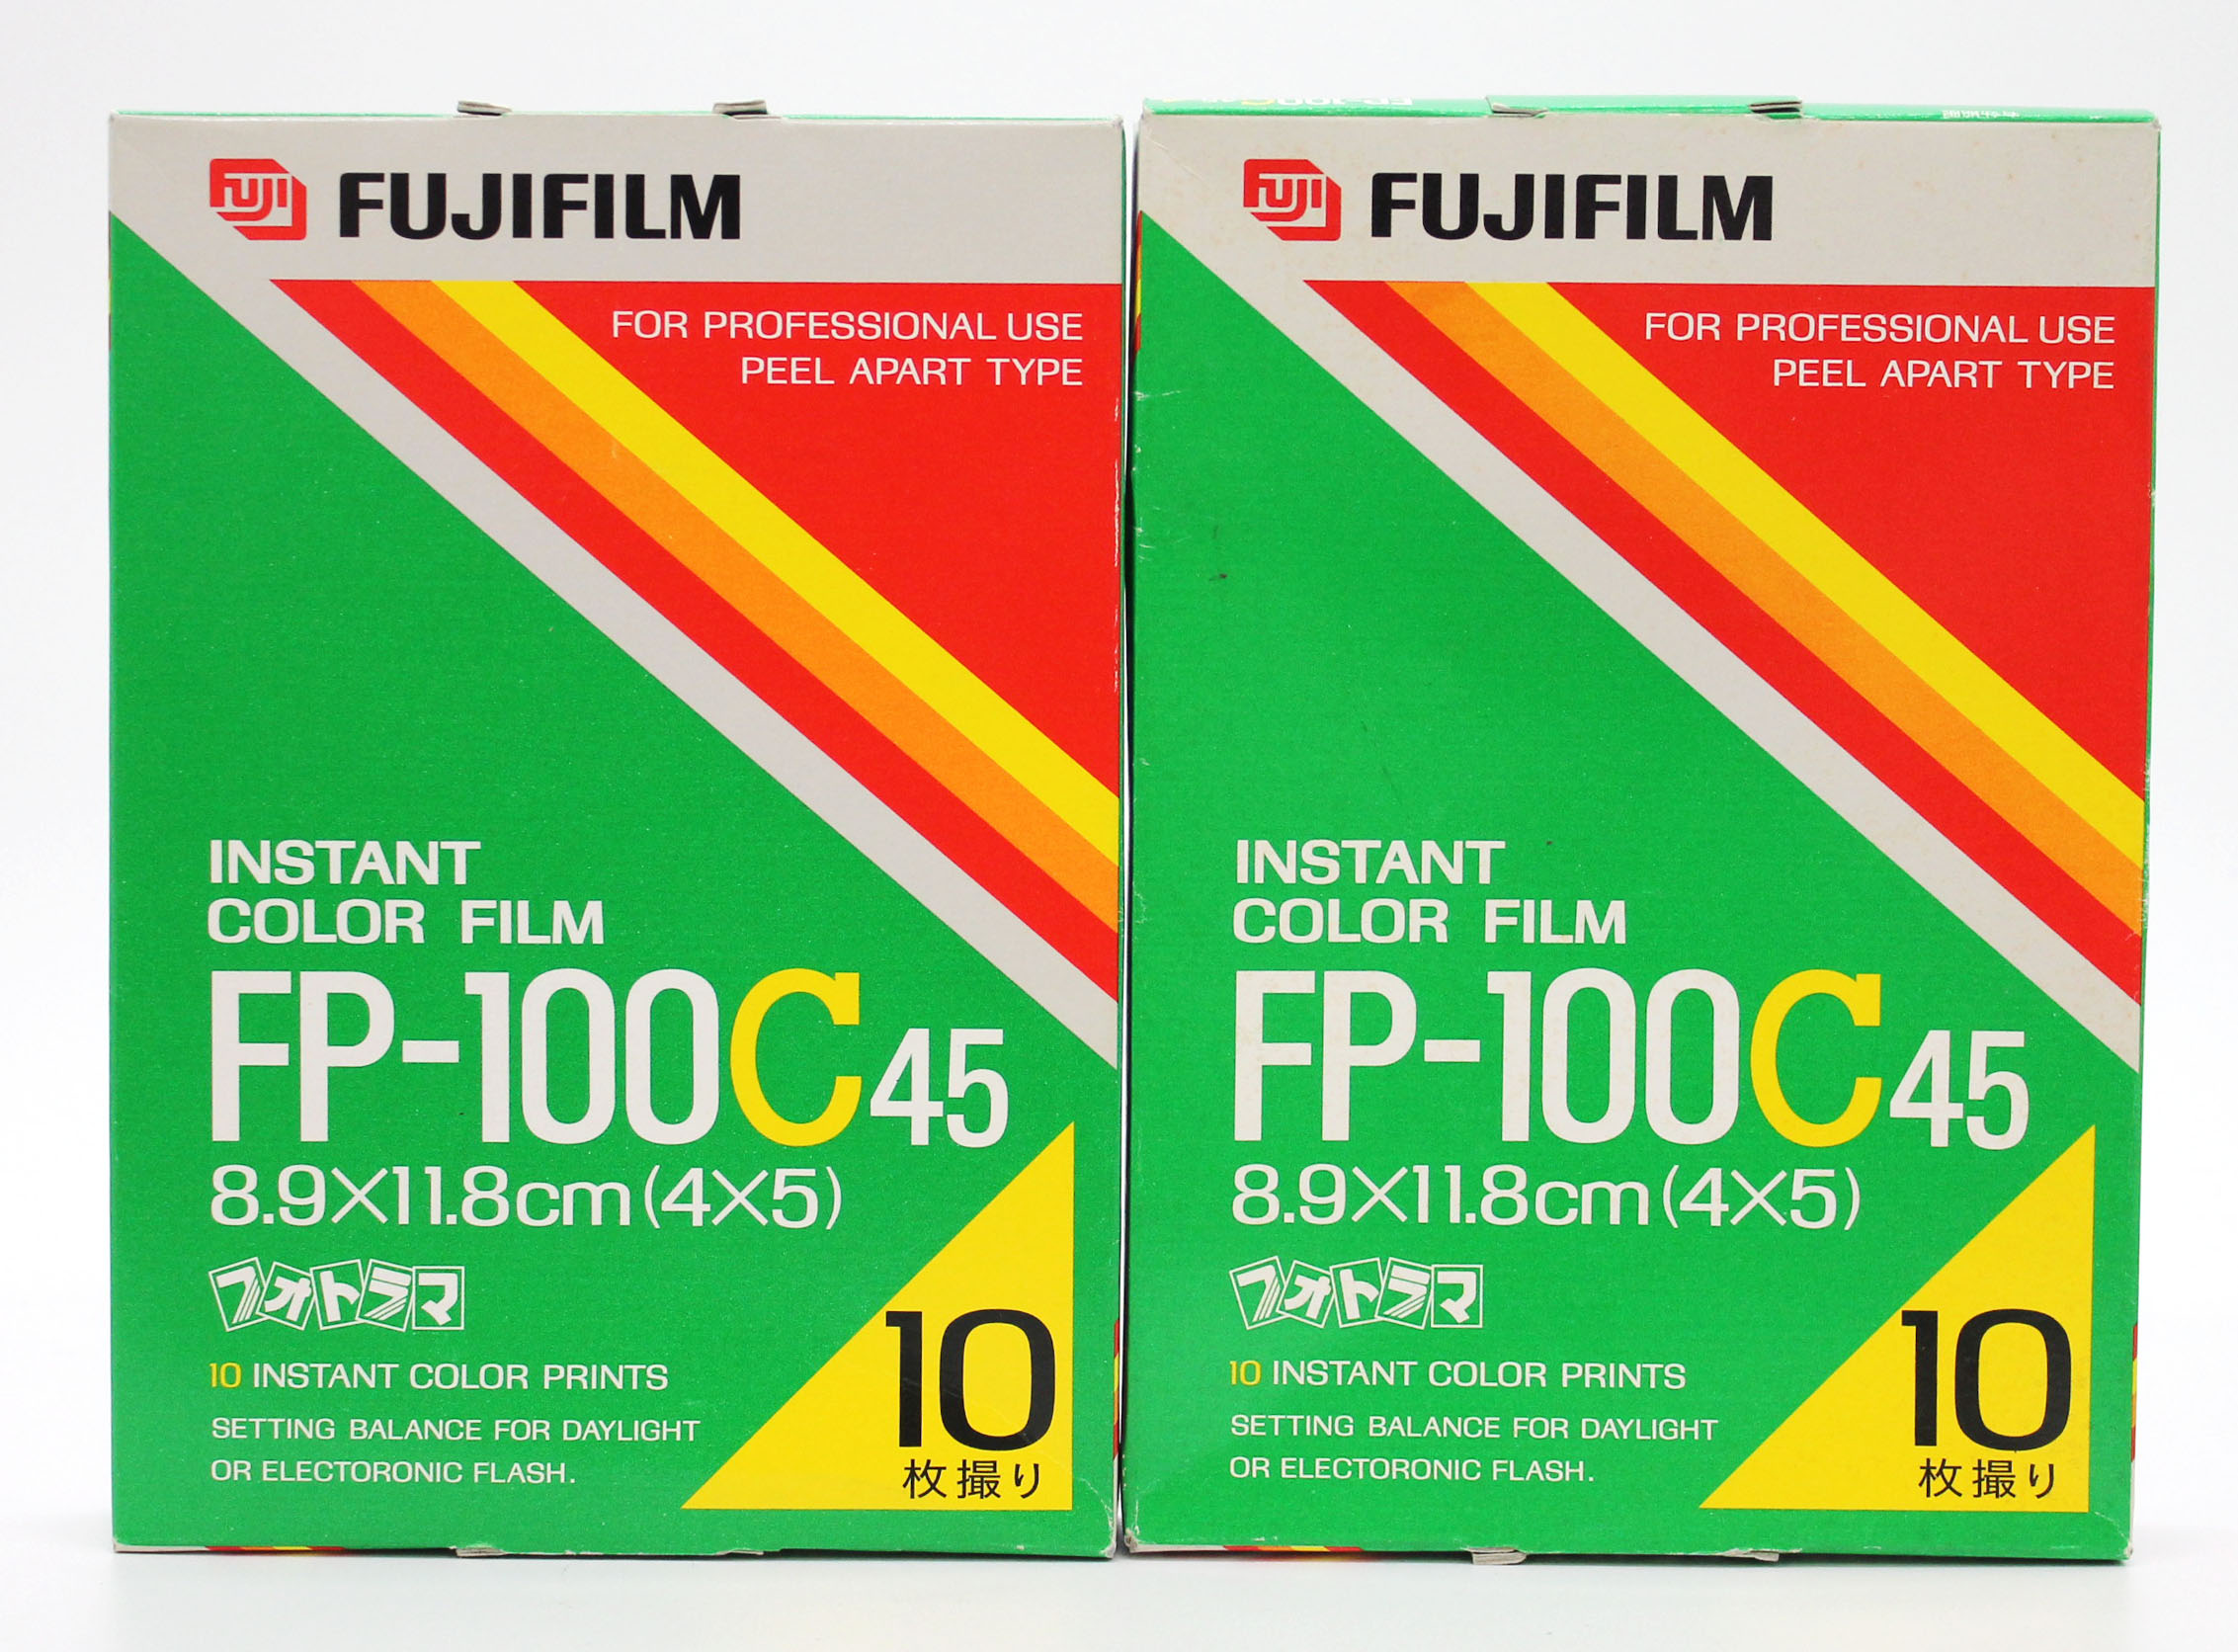 [New] Fuji Fujifilm FP-100C45 4x5 8.9x11.8cm Instant Color Film Set of 2 (EXP 2001)